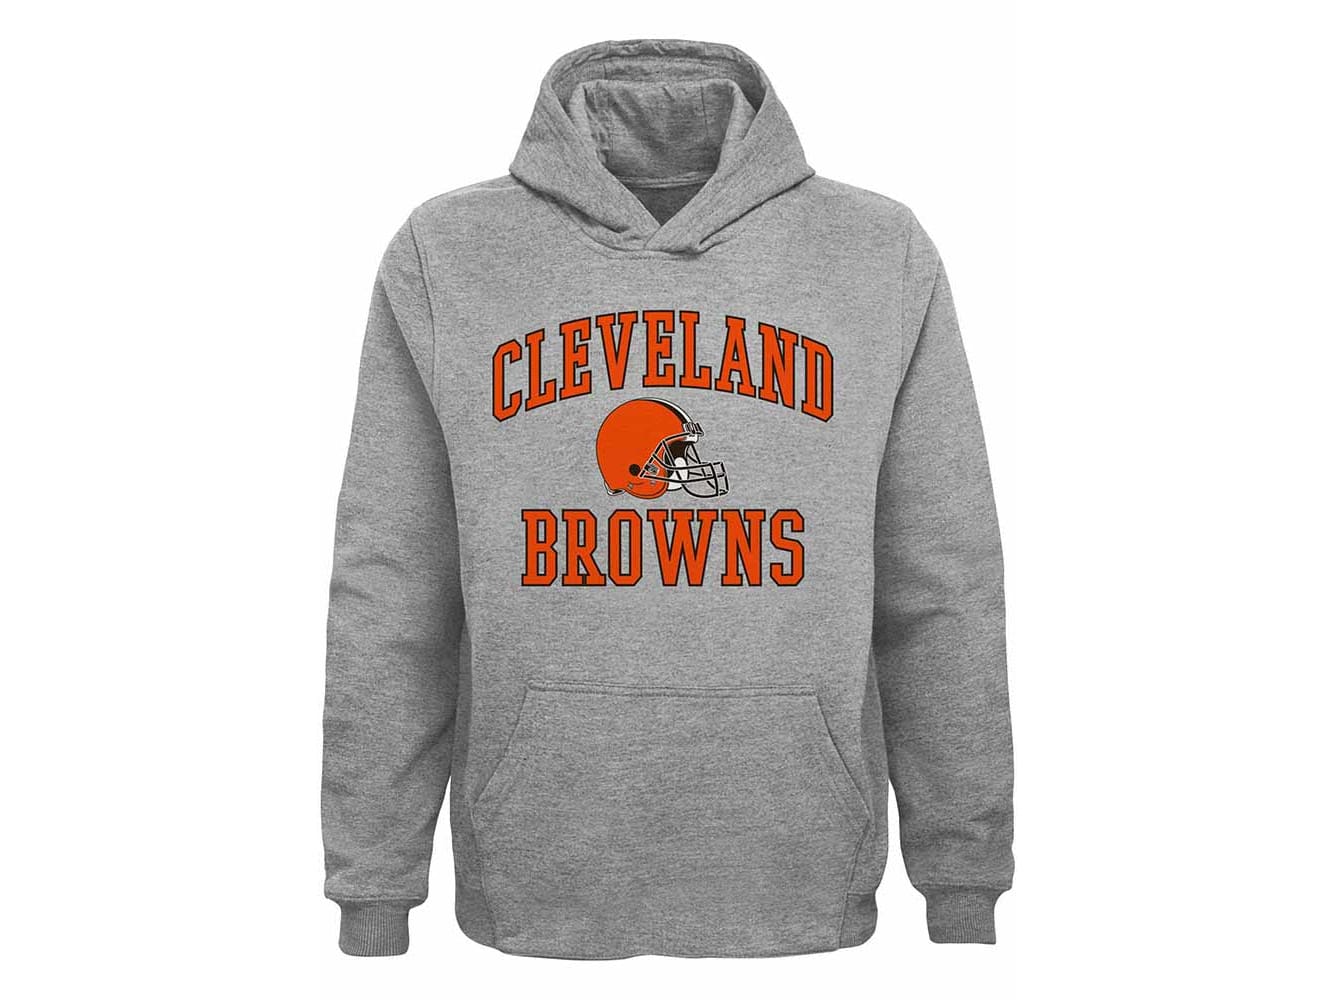 Cleveland Browns Sweatshirts in Cleveland Browns Team Shop